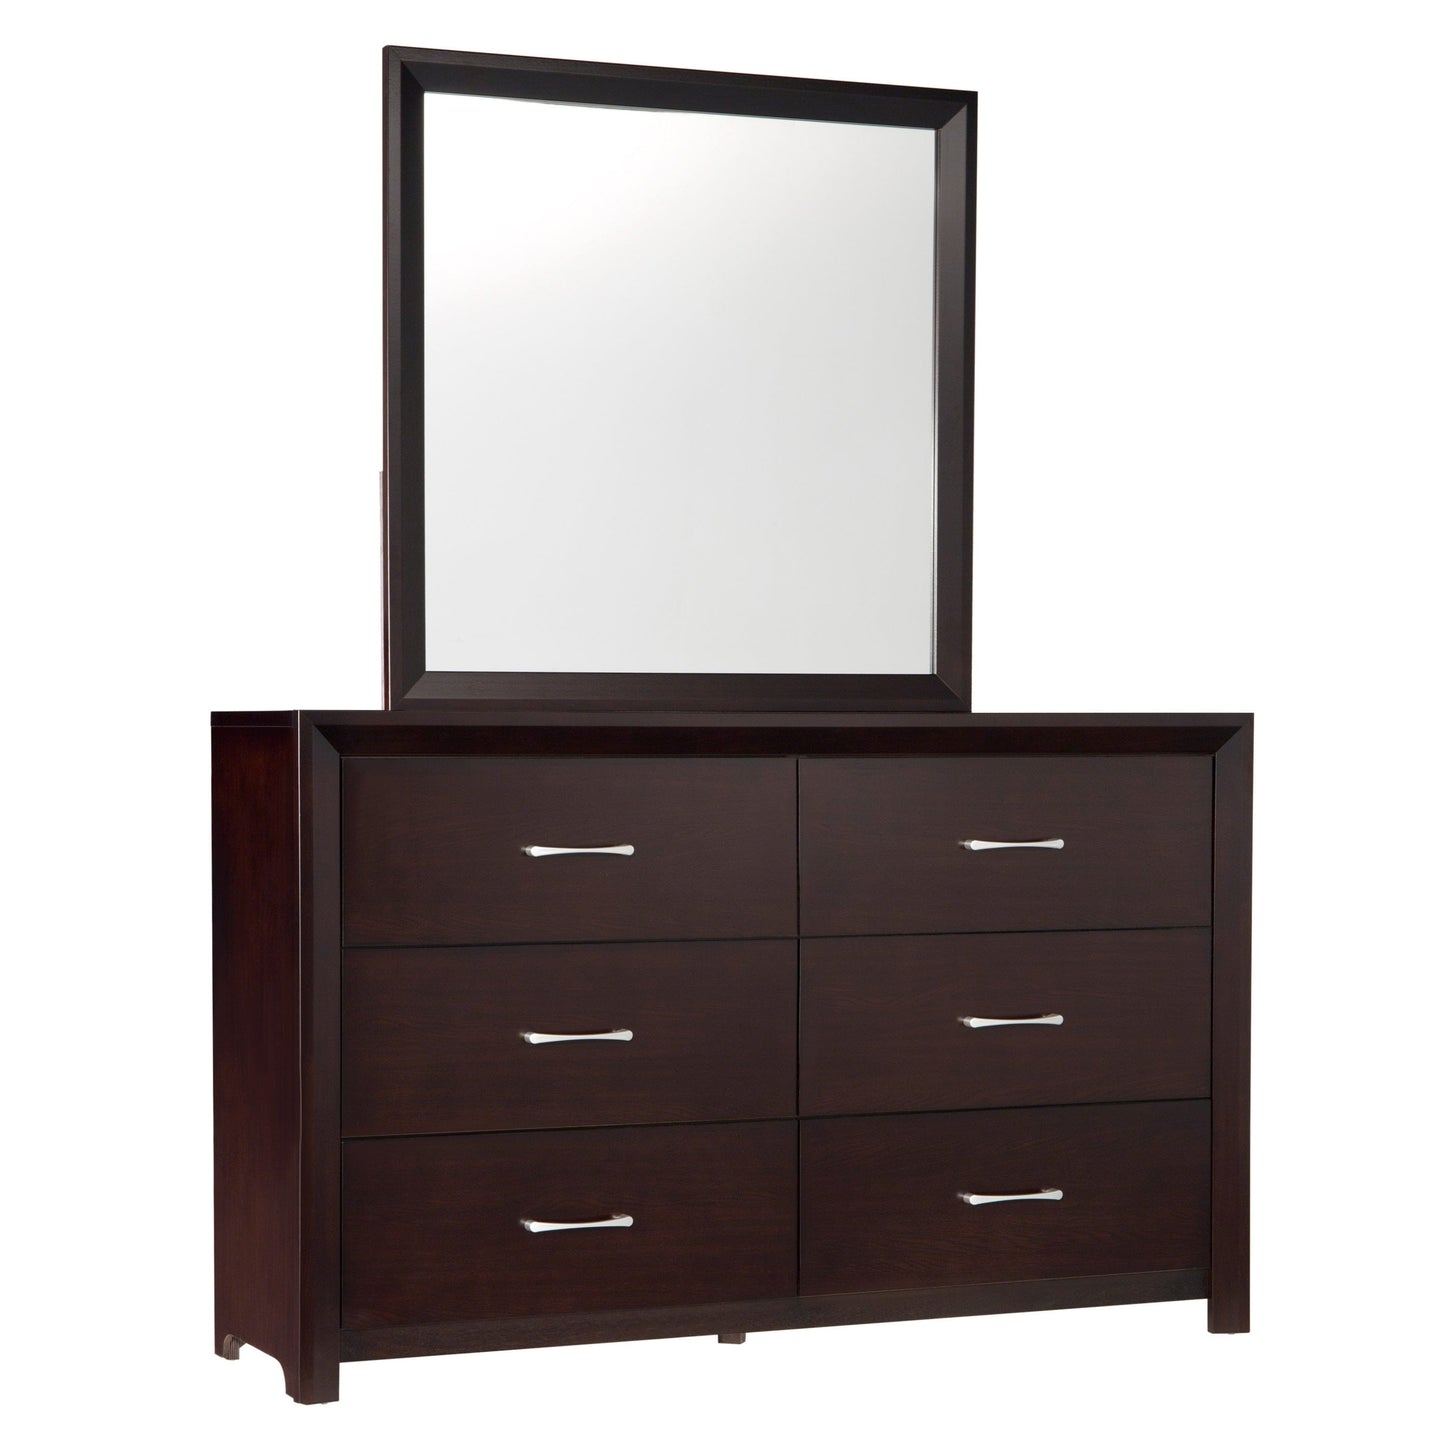 1pc Dresser of 6x Drawers Silver Tone Bar Pulls Contemporary Design Bedroom Furniture, Espresso Finish